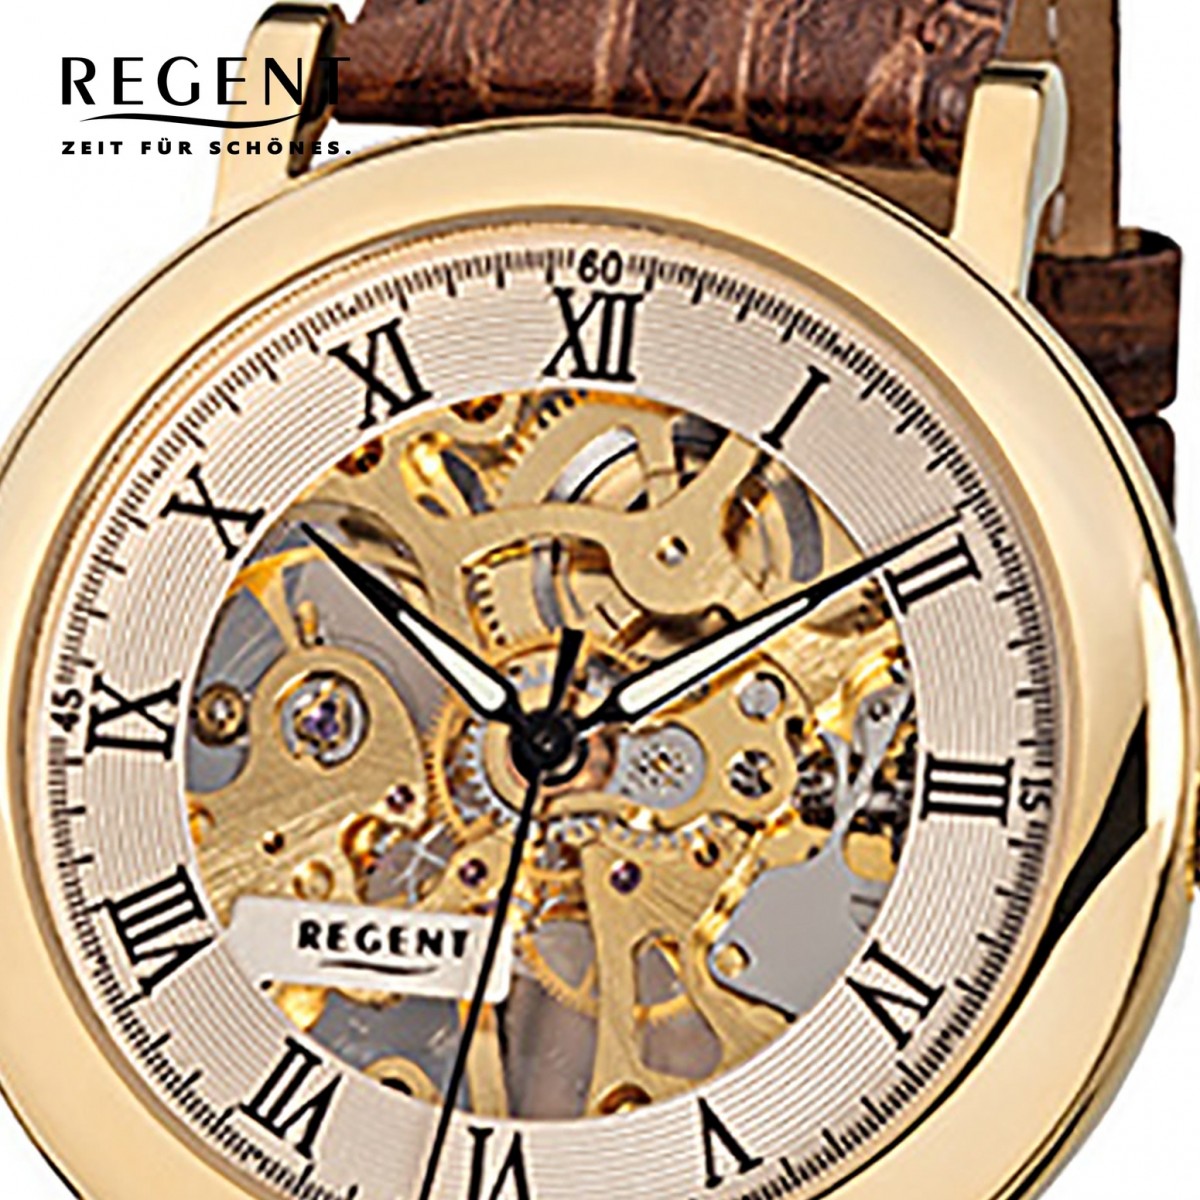 Regent Herren-Armbanduhr Leder braun URF758 Handaufzug mechanisch Mineralglas F-1390